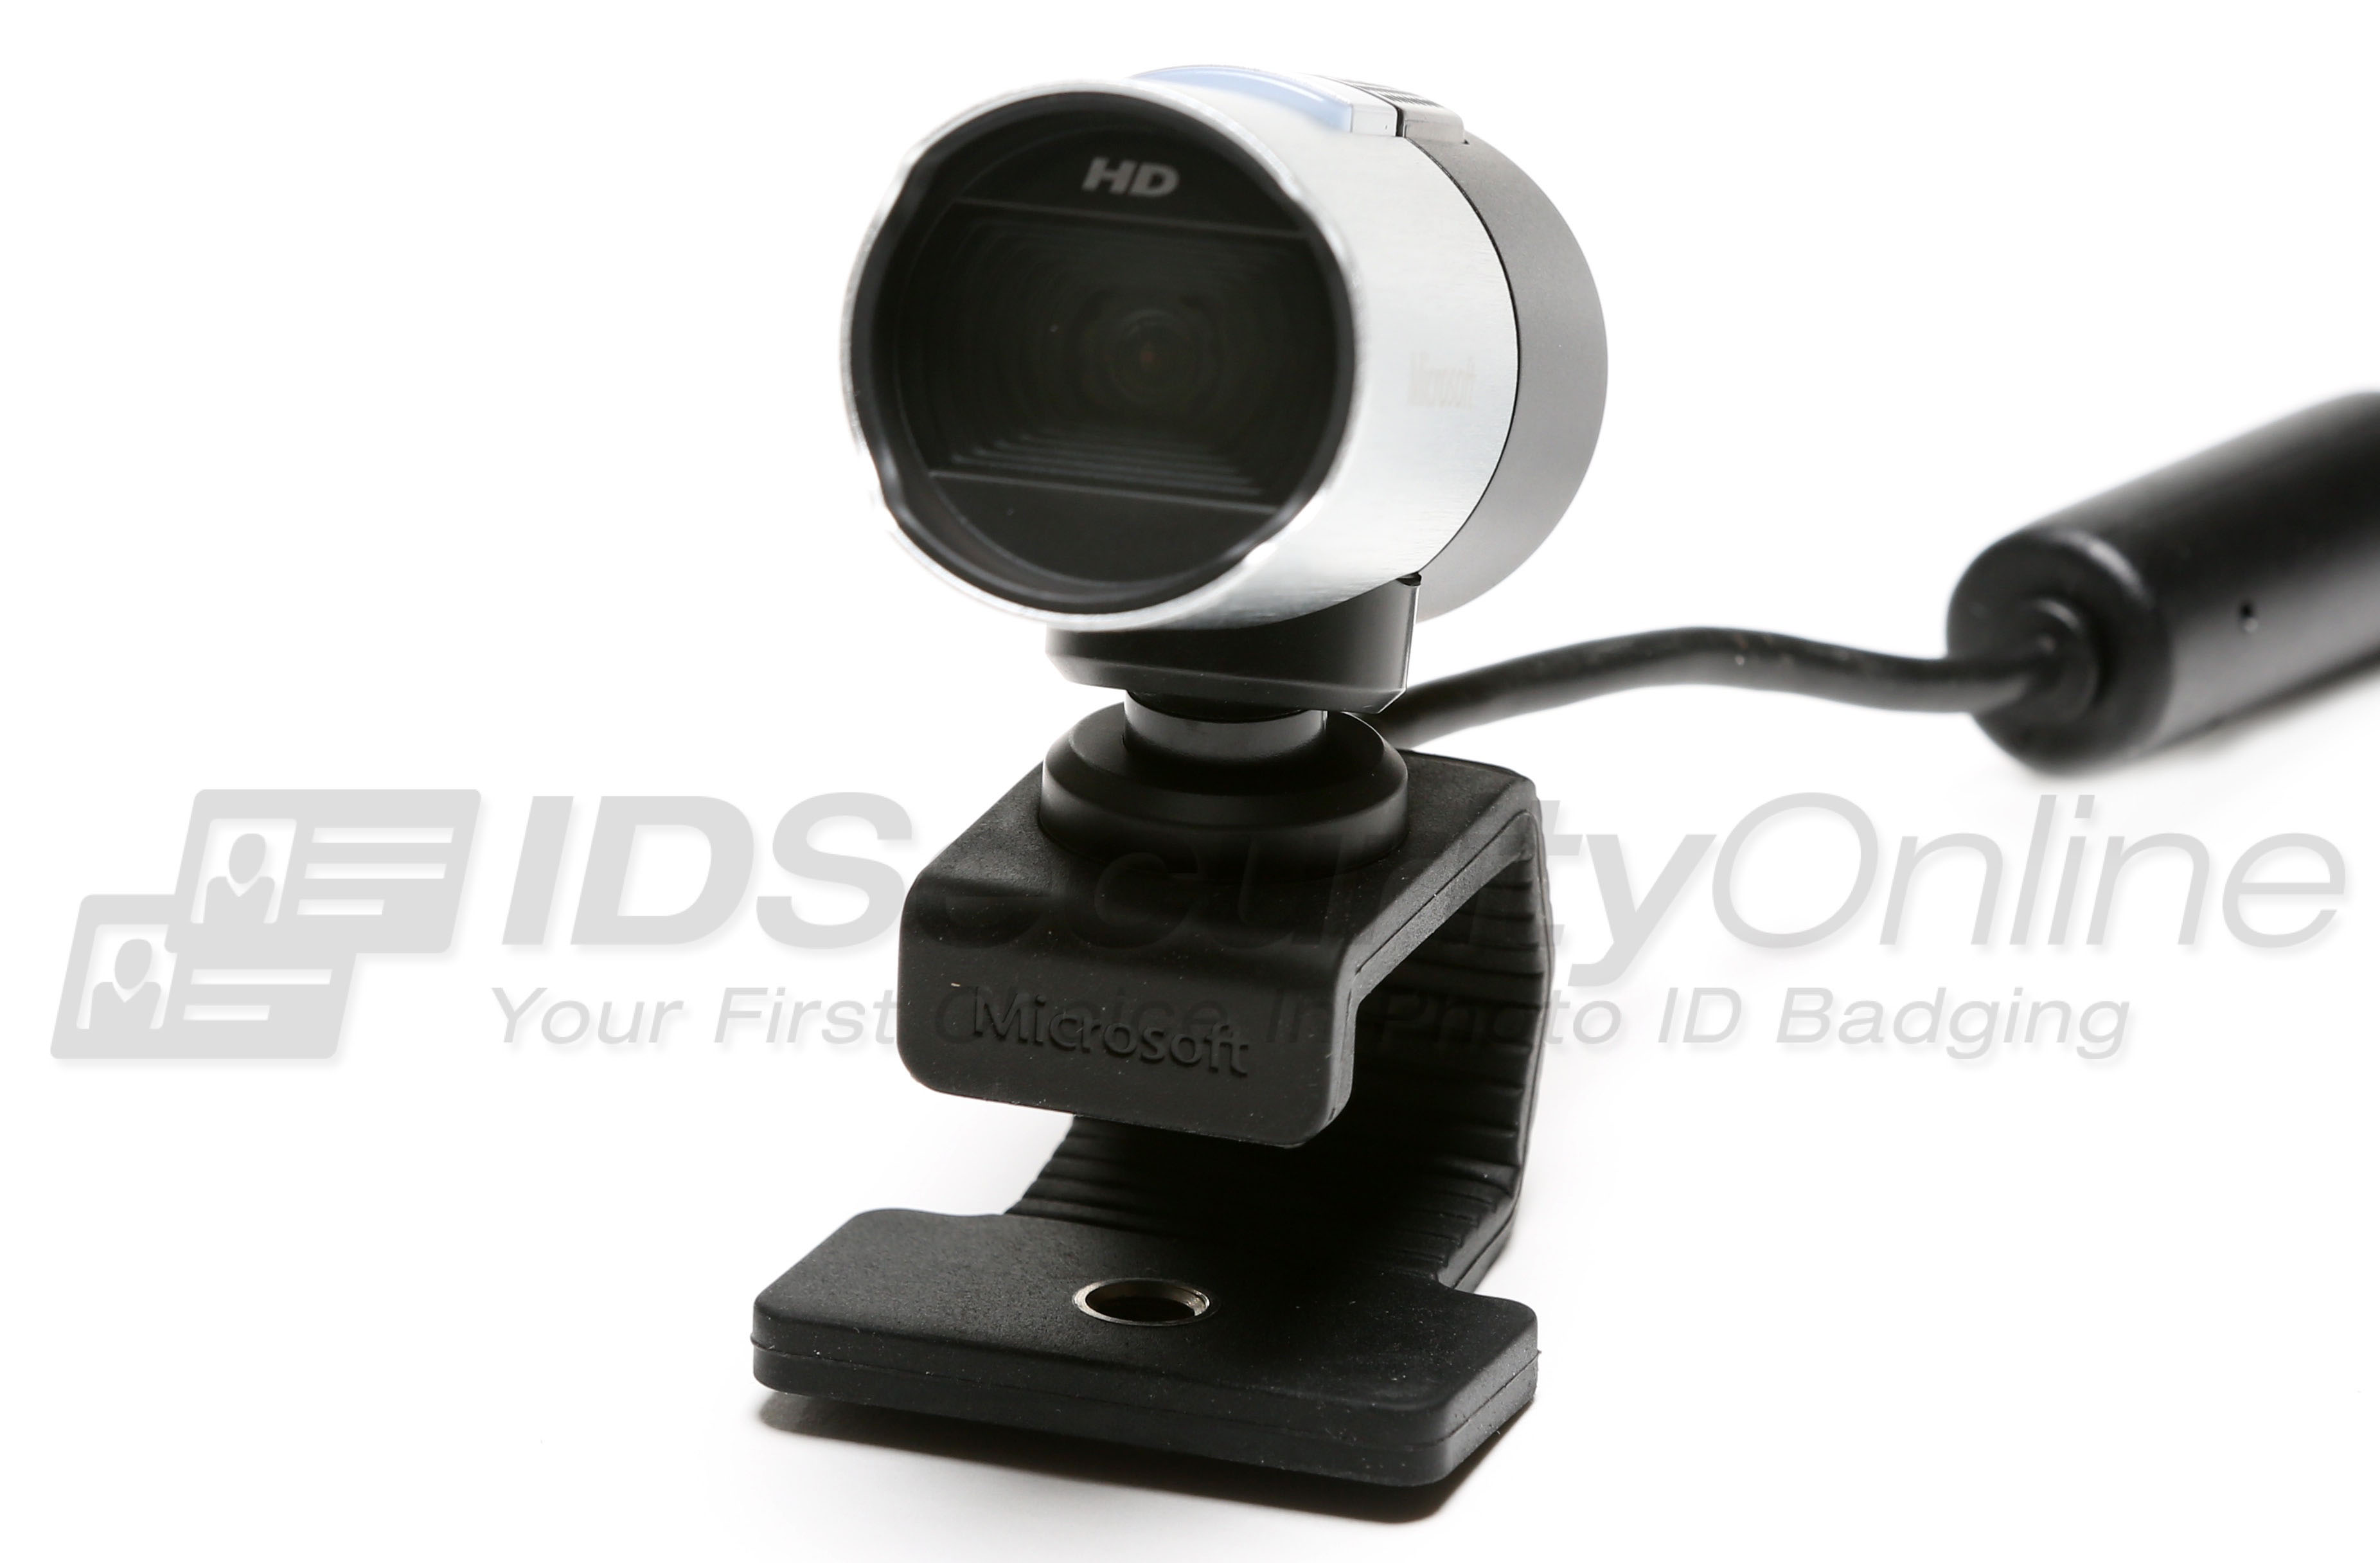 mac driver for microsoft webcam